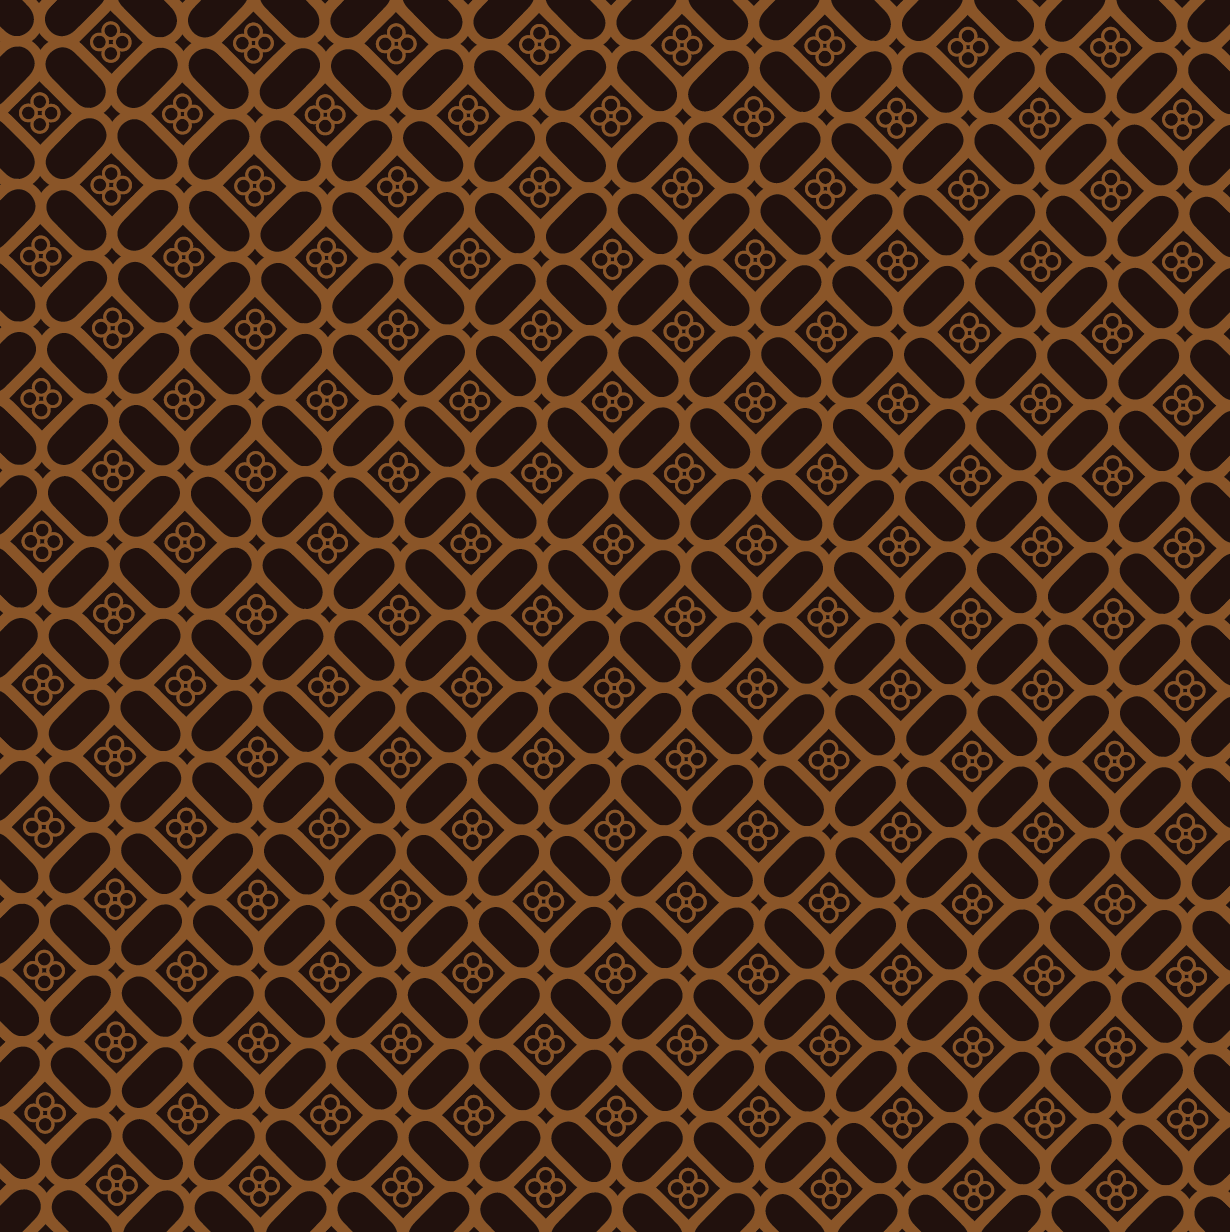 Louis Vuitton Patterns, Vol. 3: Game On by itsfarahbakhsh on DeviantArt